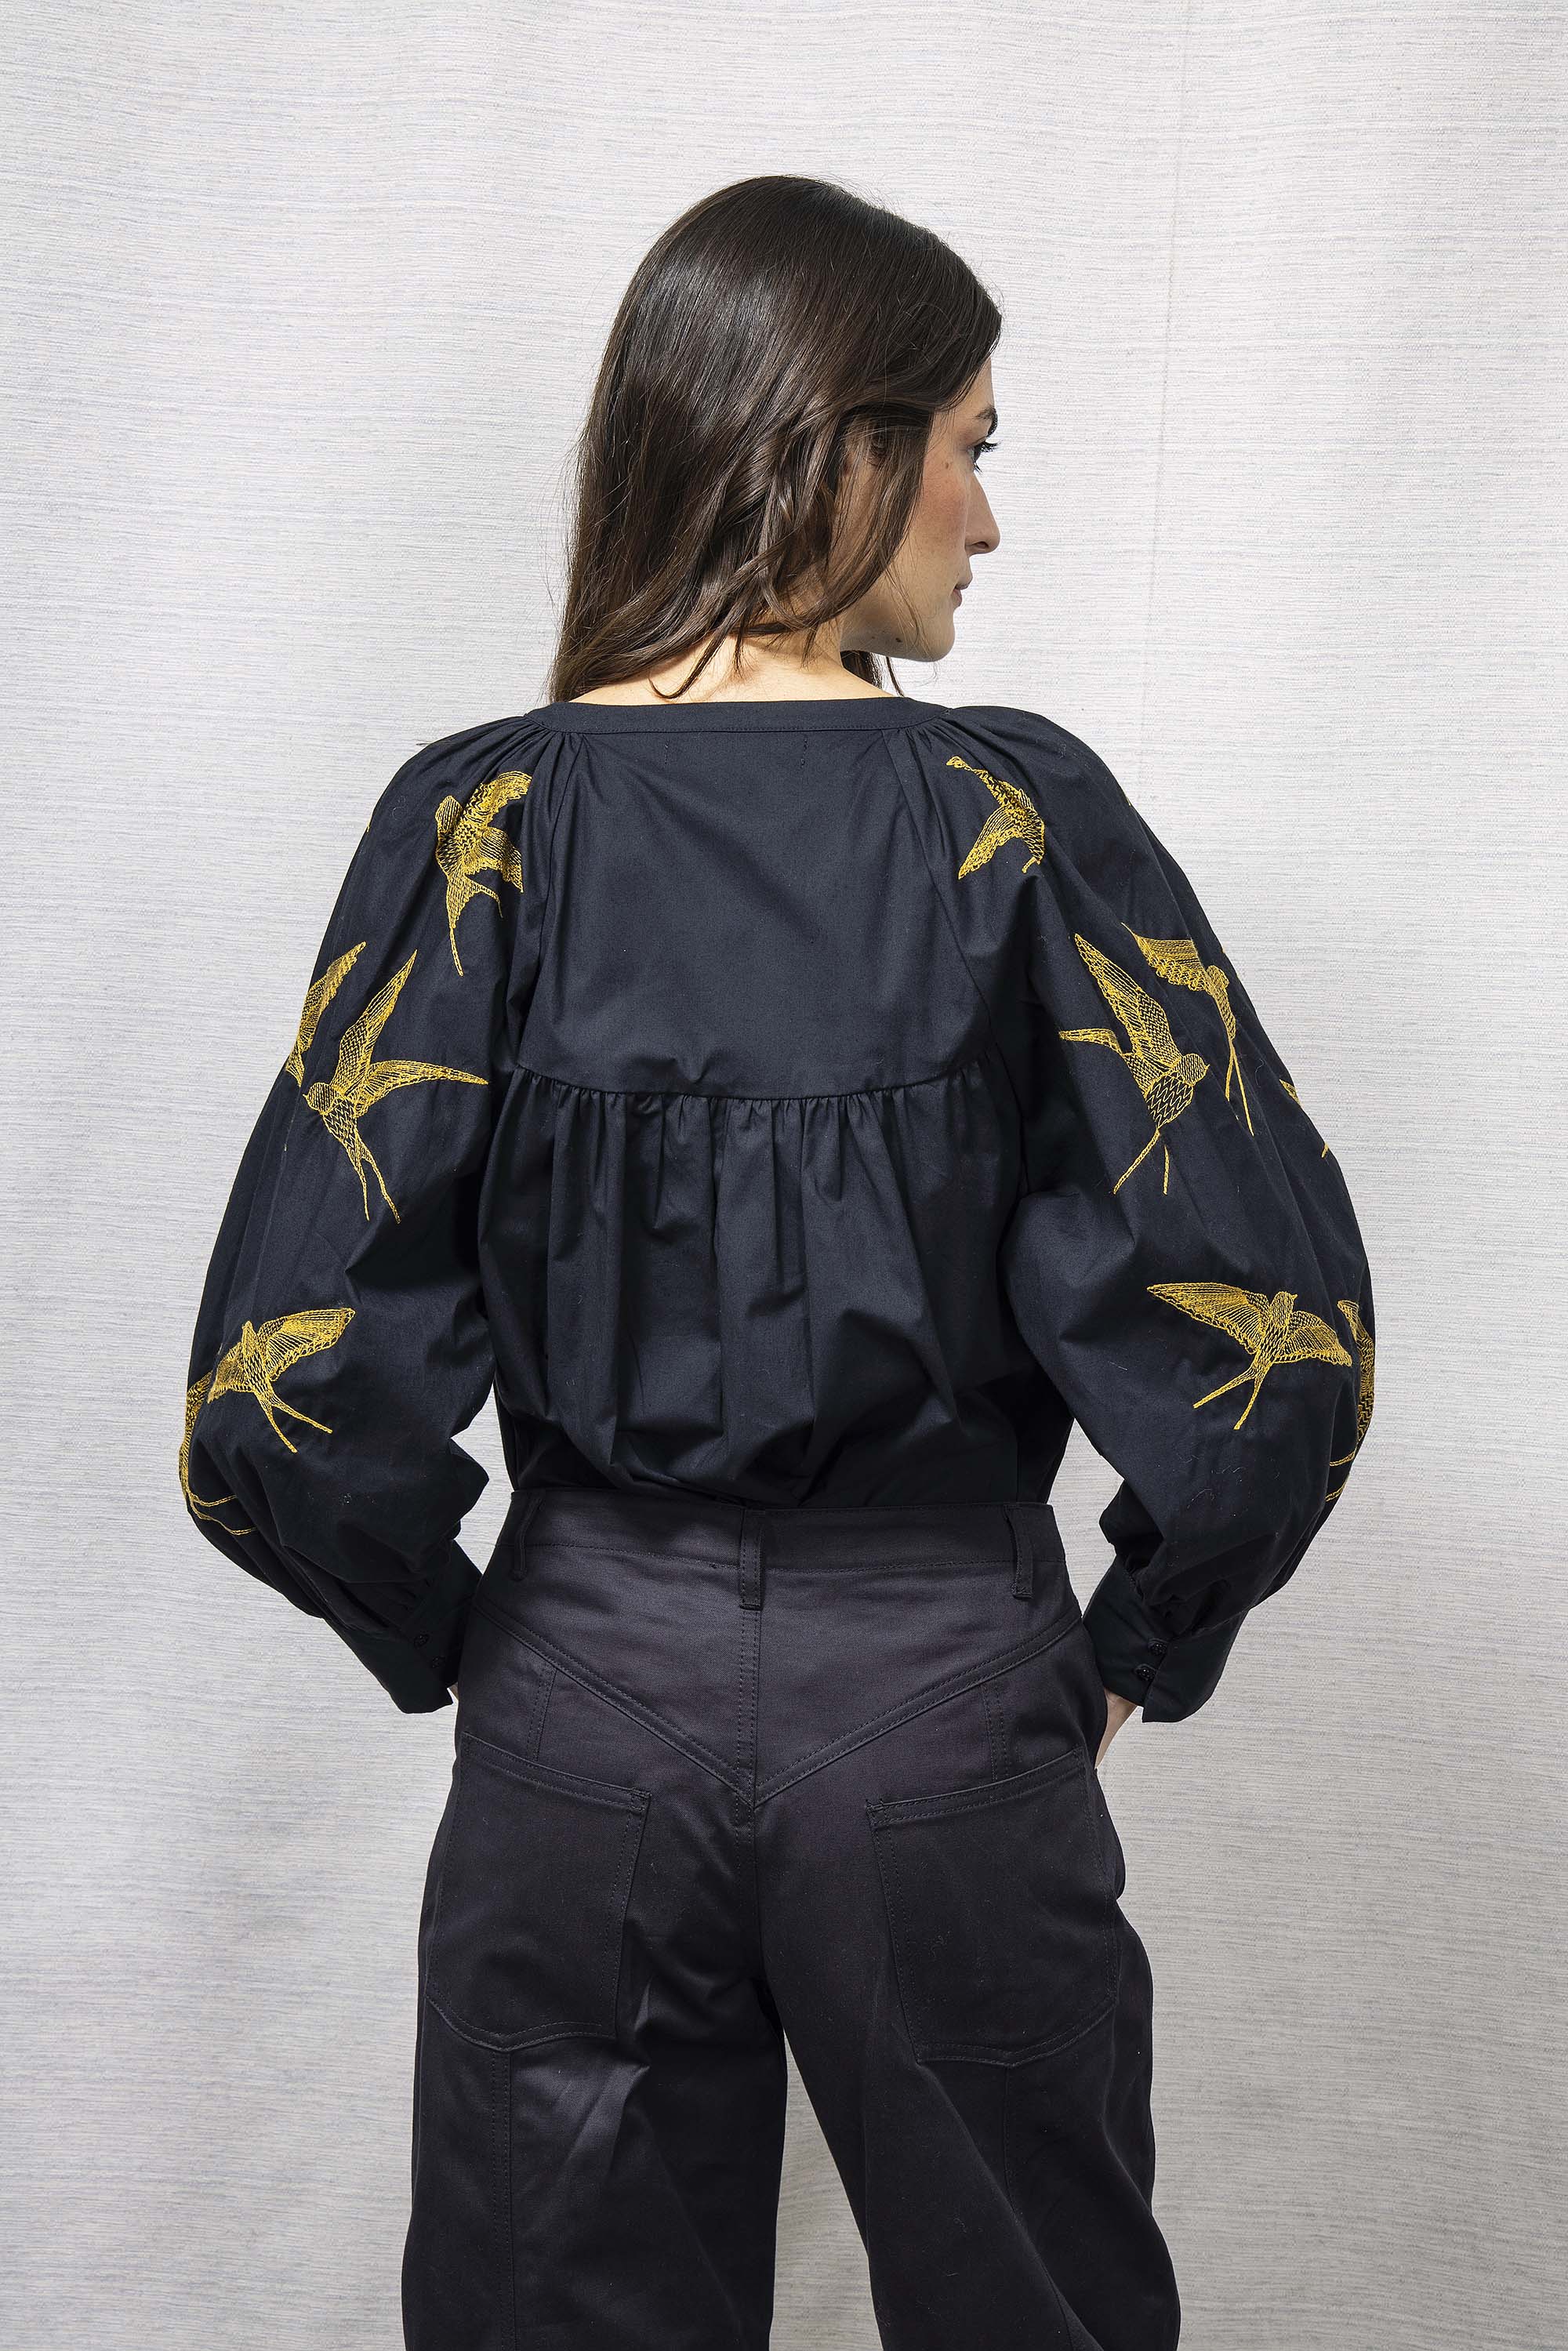 Chemise Doria Aves Noir chemise femme, grand incontournable du vestiaire féminin